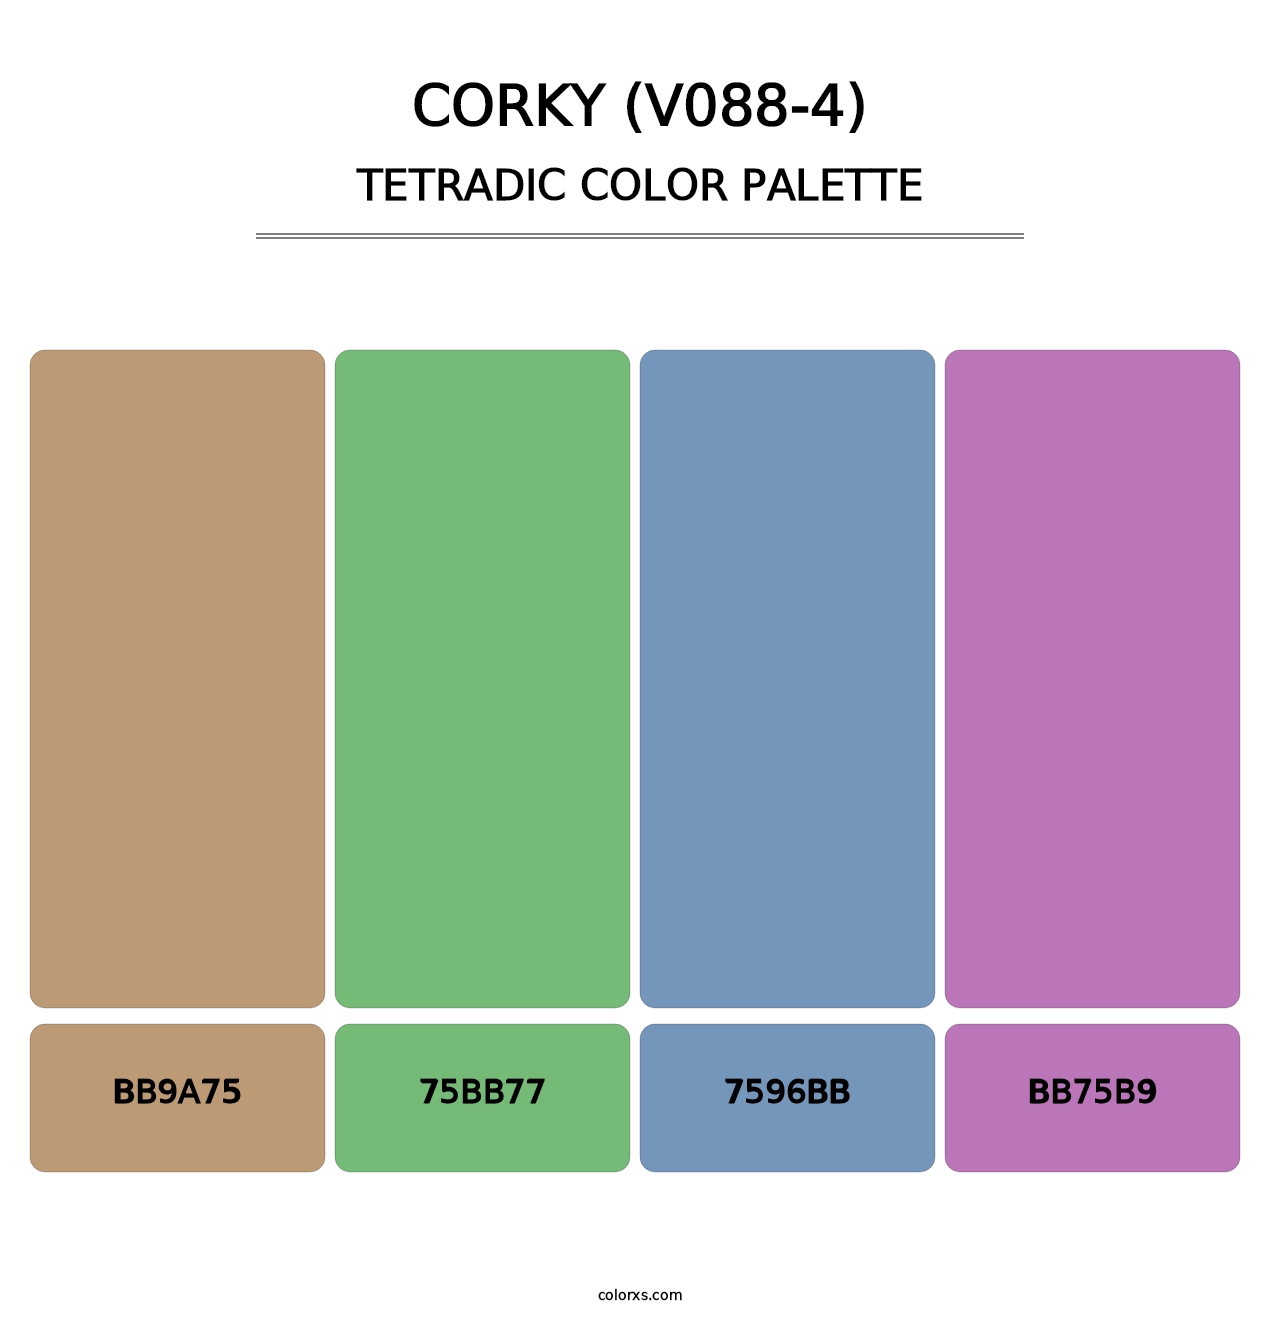 Corky (V088-4) - Tetradic Color Palette